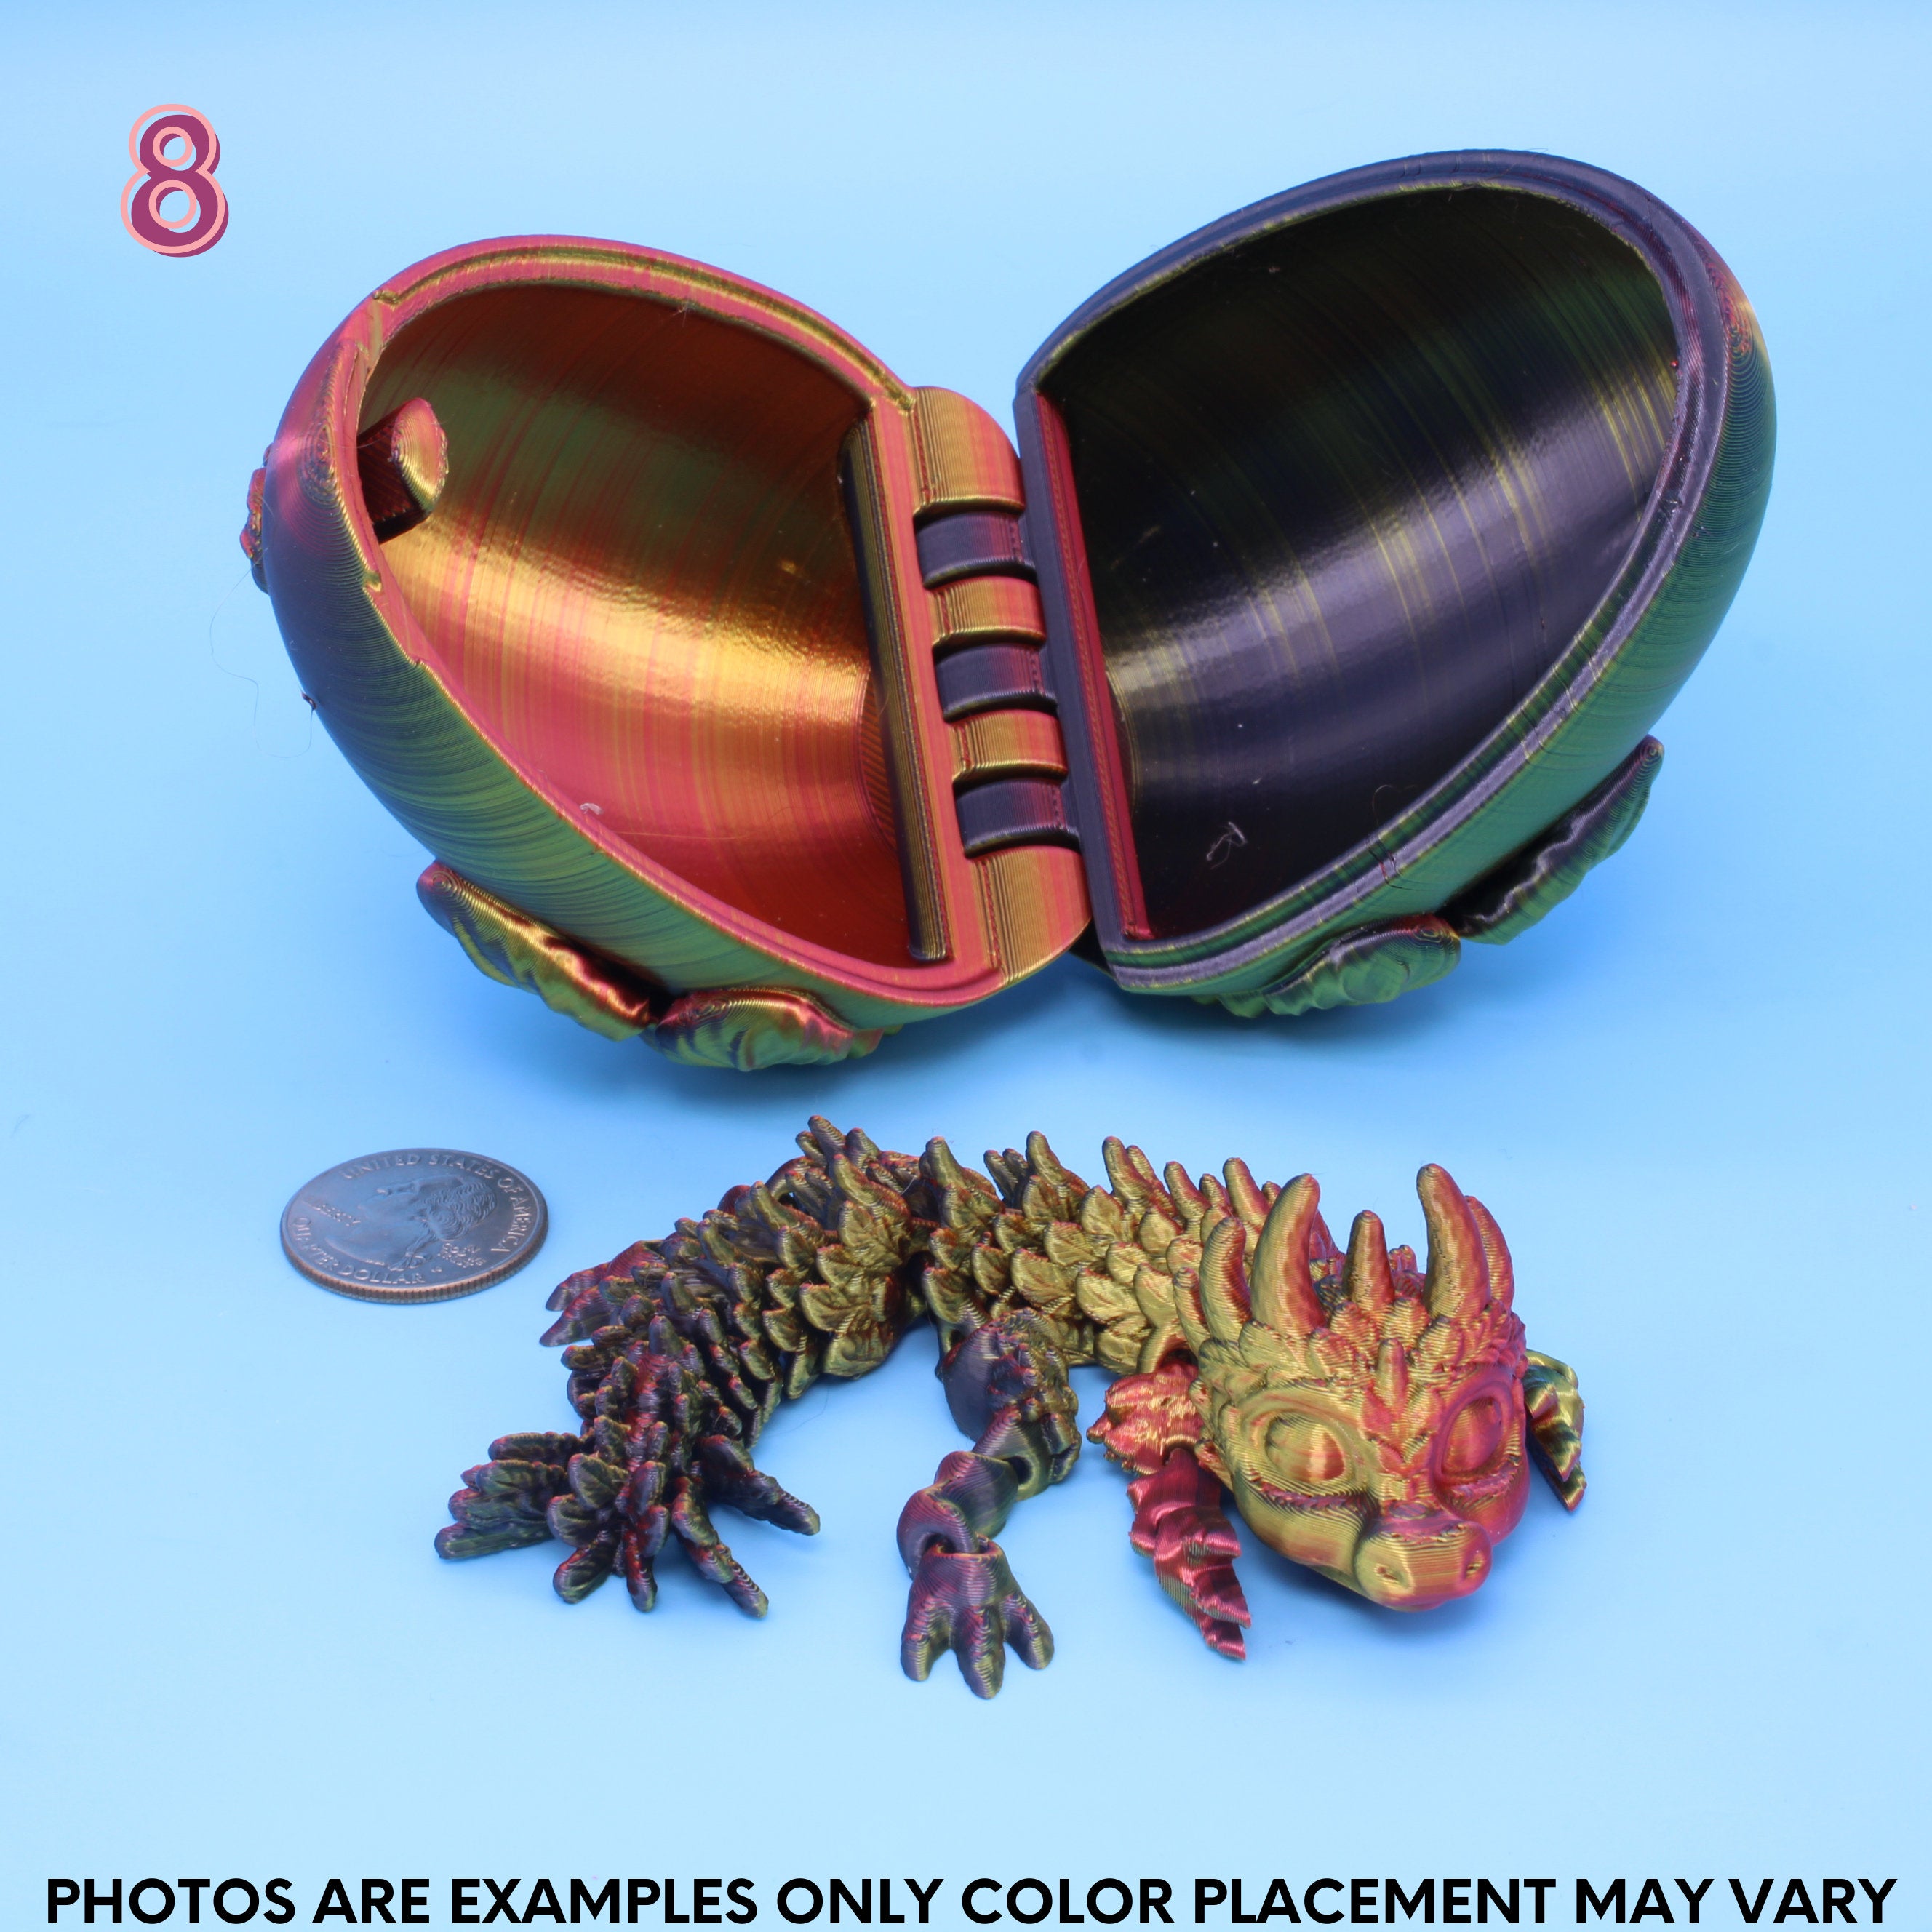 Deyva no wings version and egg Dragon | 3D Printed